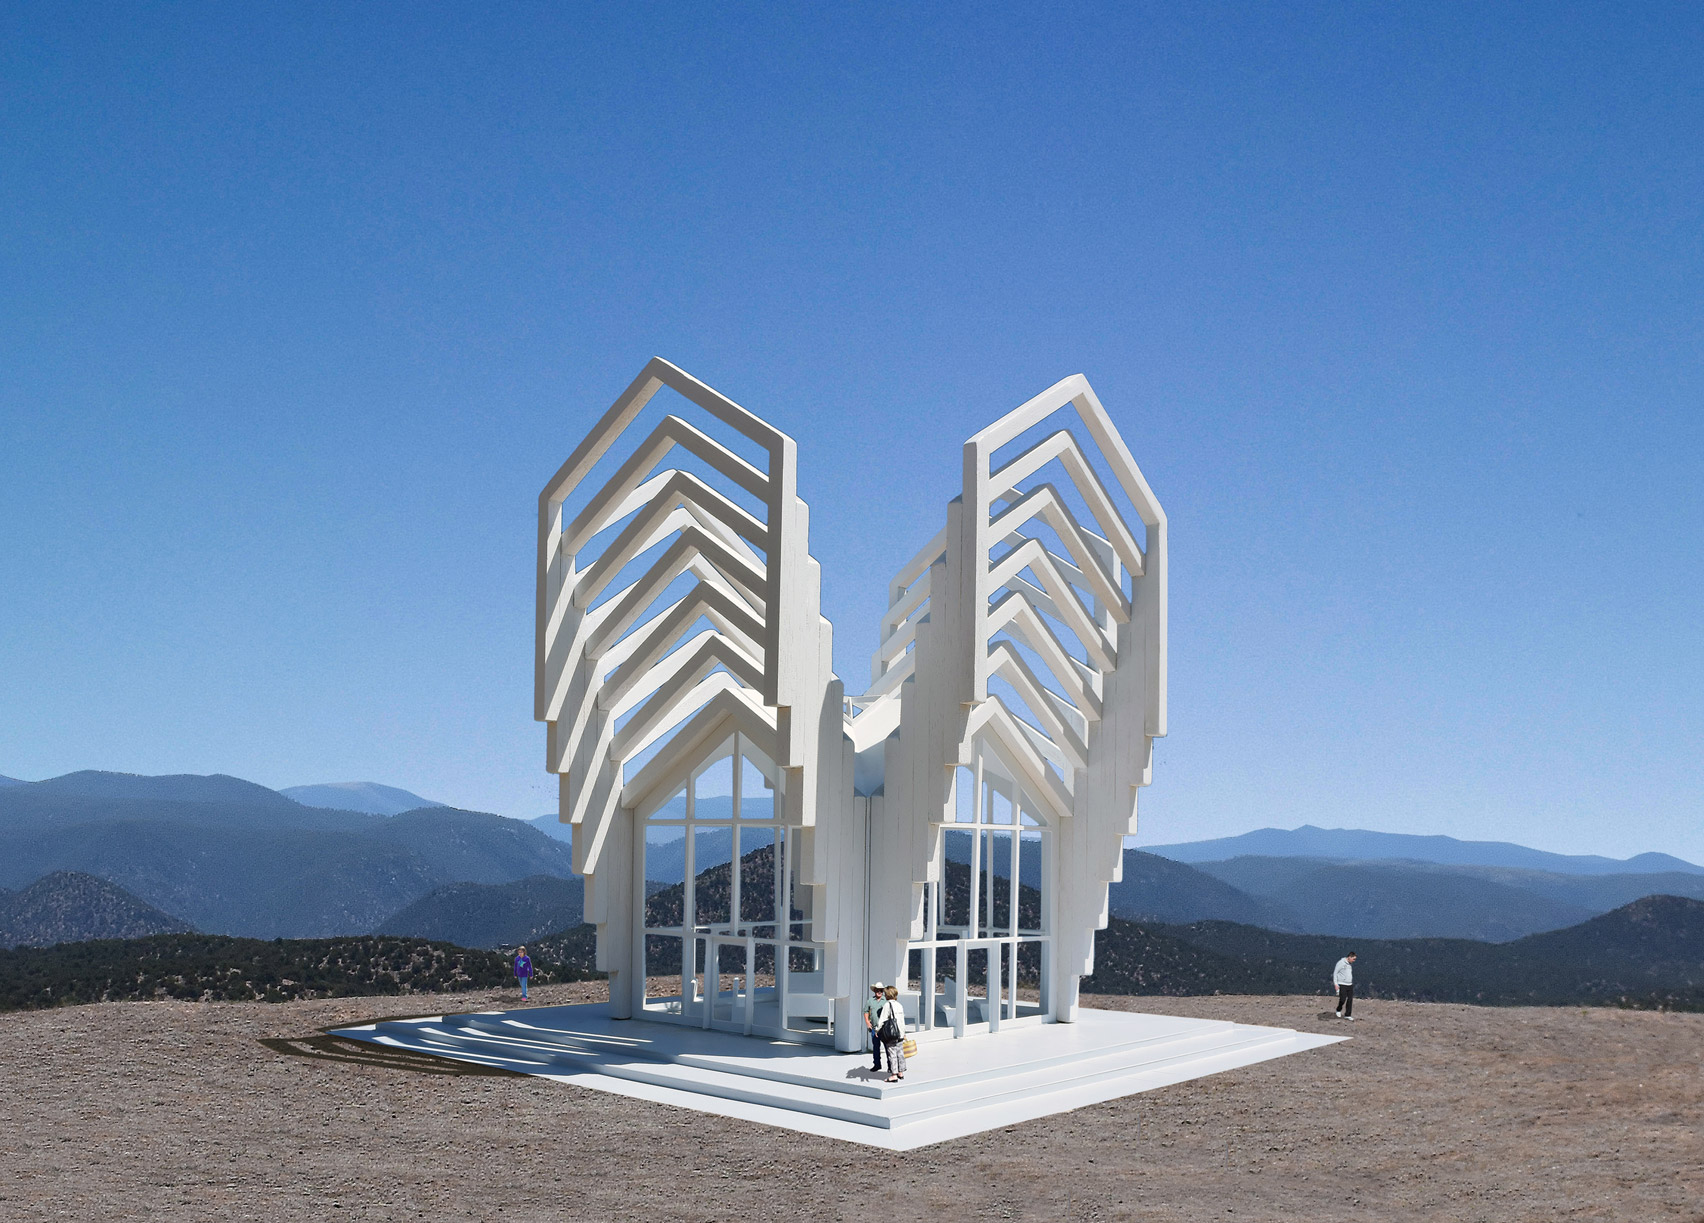 A Chapel for New Mexico by Michael Jantzen